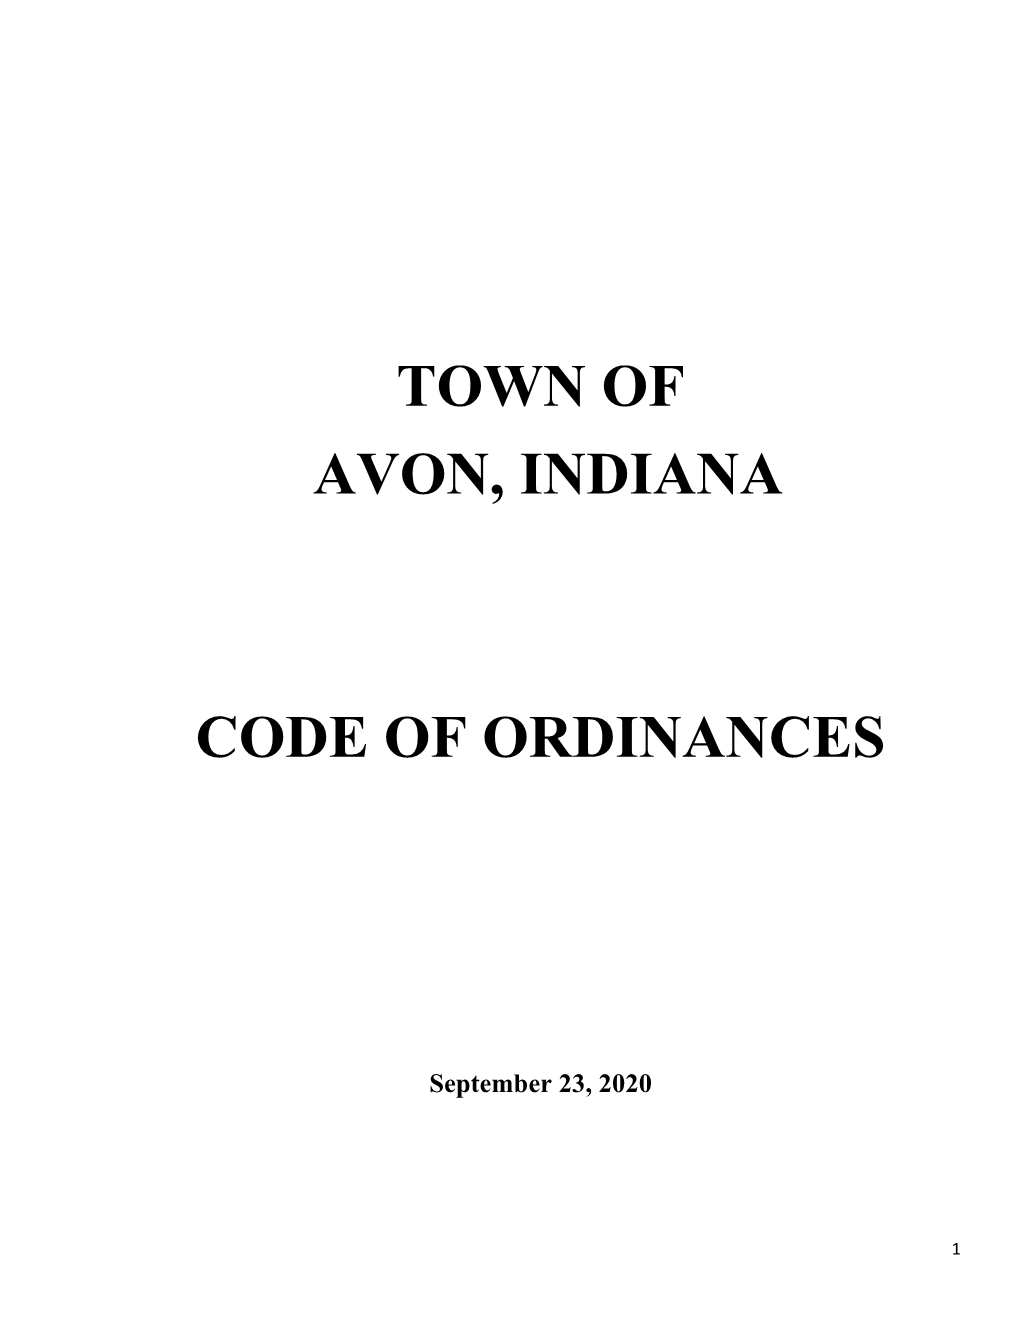 Town of Avon, Indiana Code of Ordinances